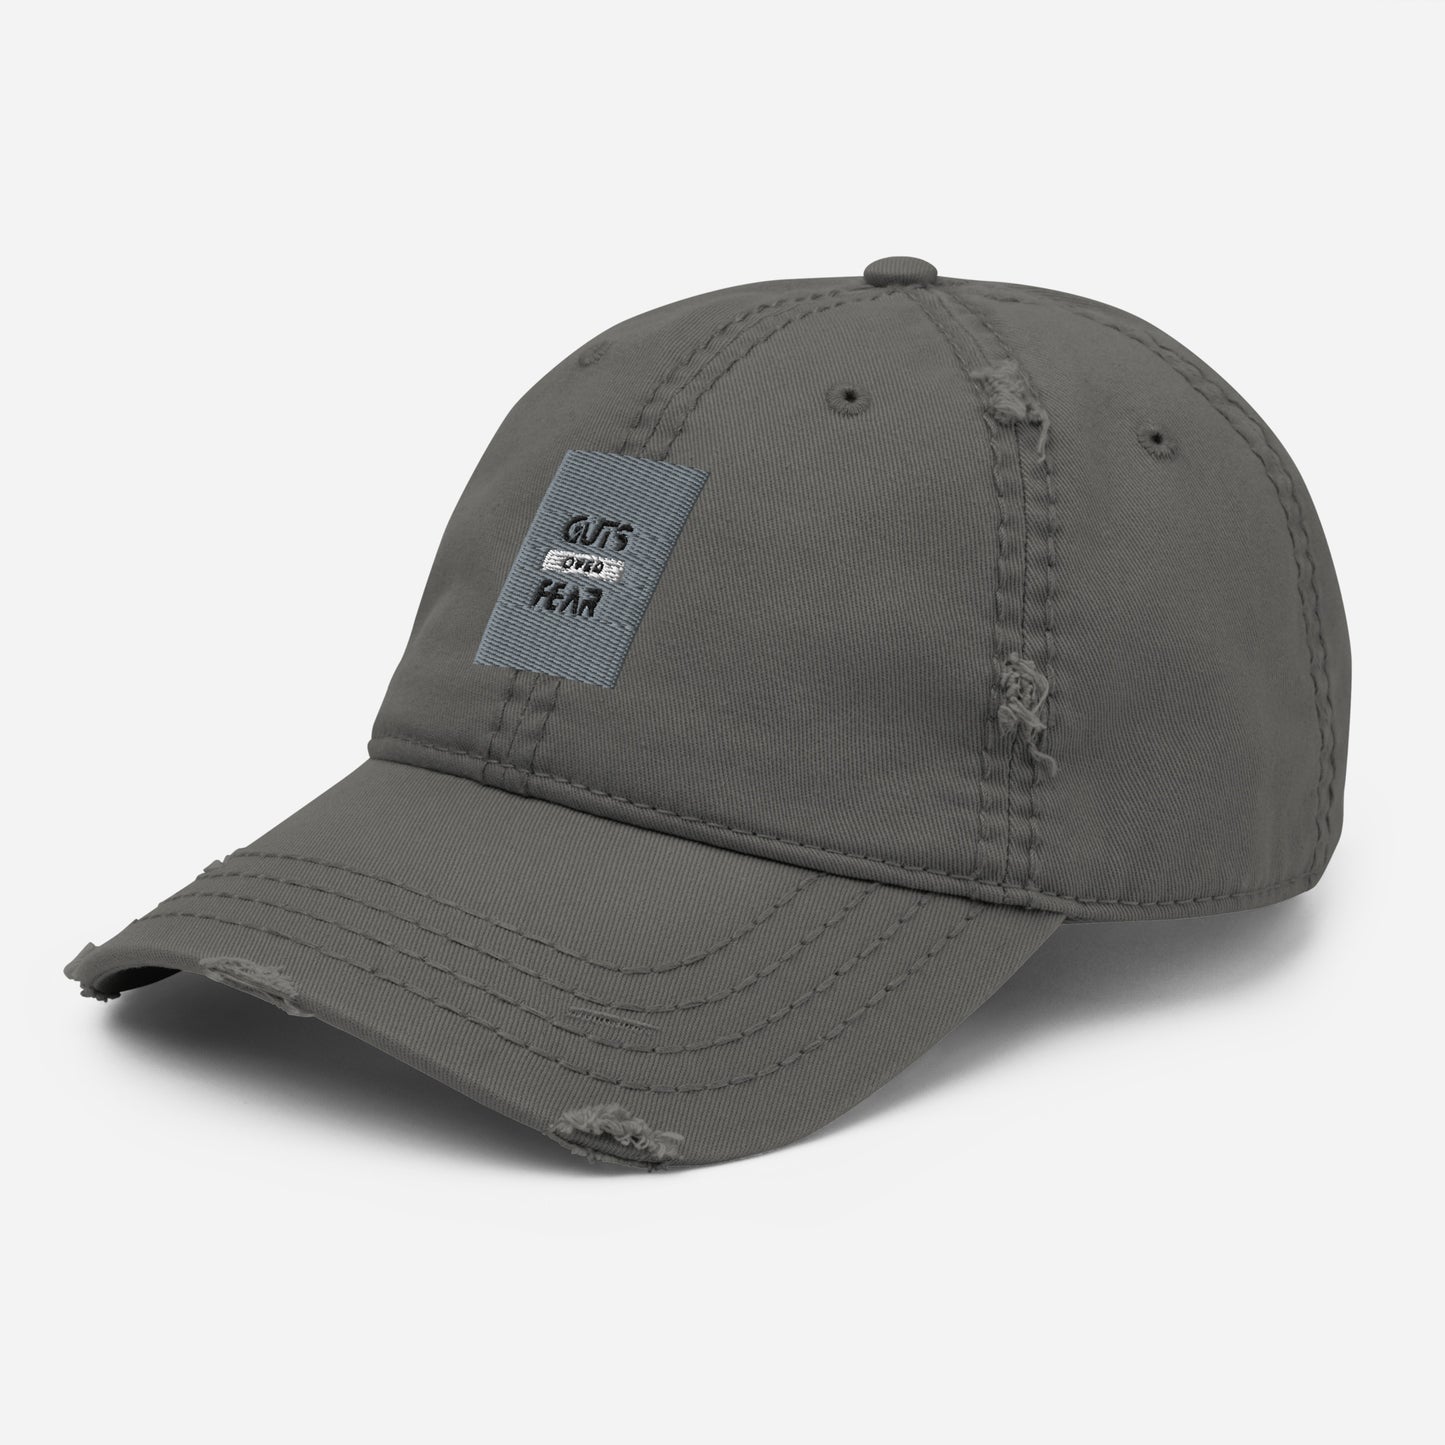 Distressed Dad Hat (Base Ball cap)